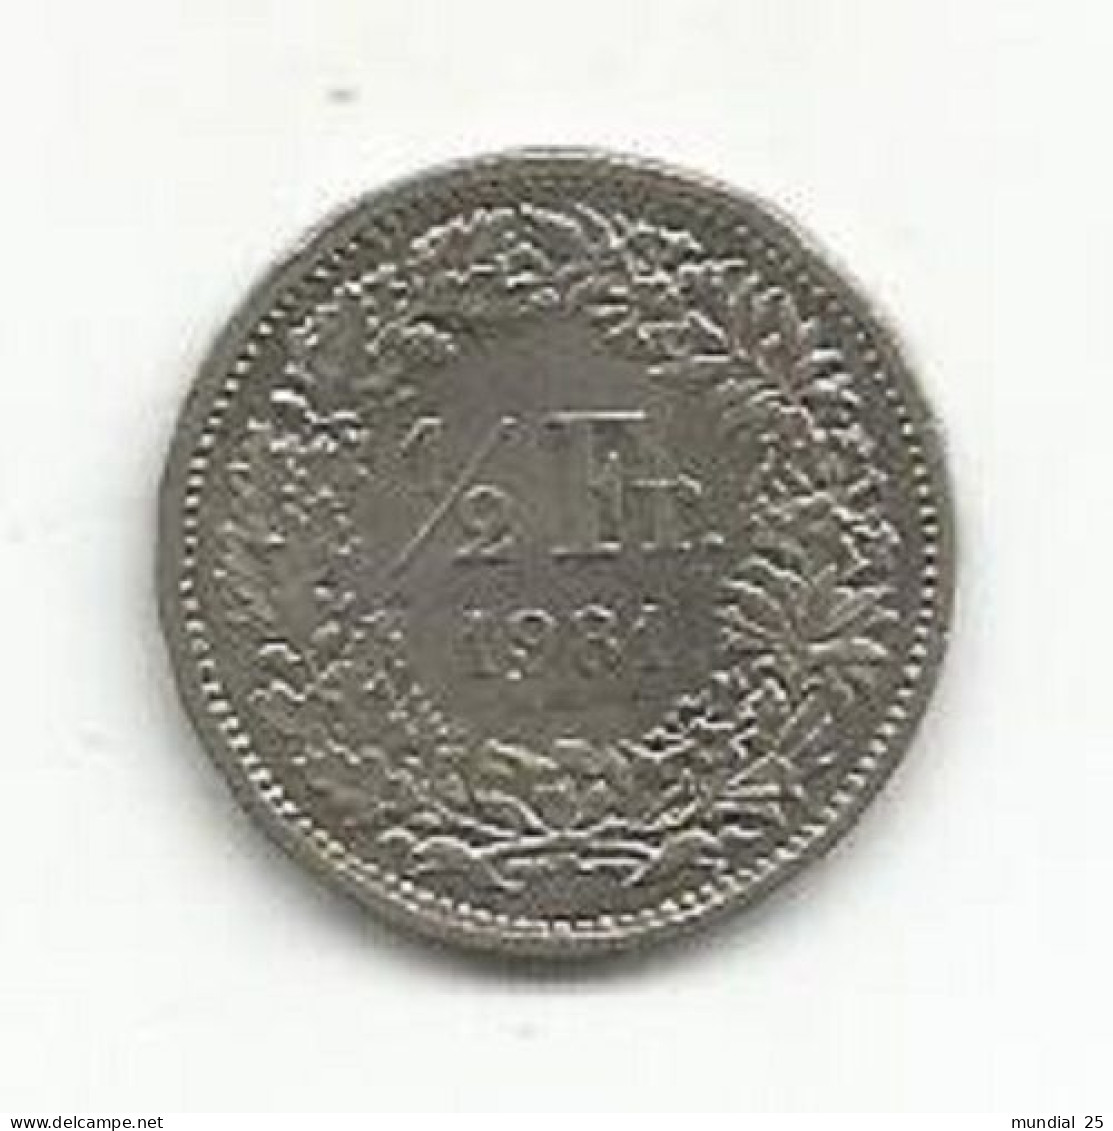 SWITZERLAND 1/2 FRANC 1981 - 1/2 Franc